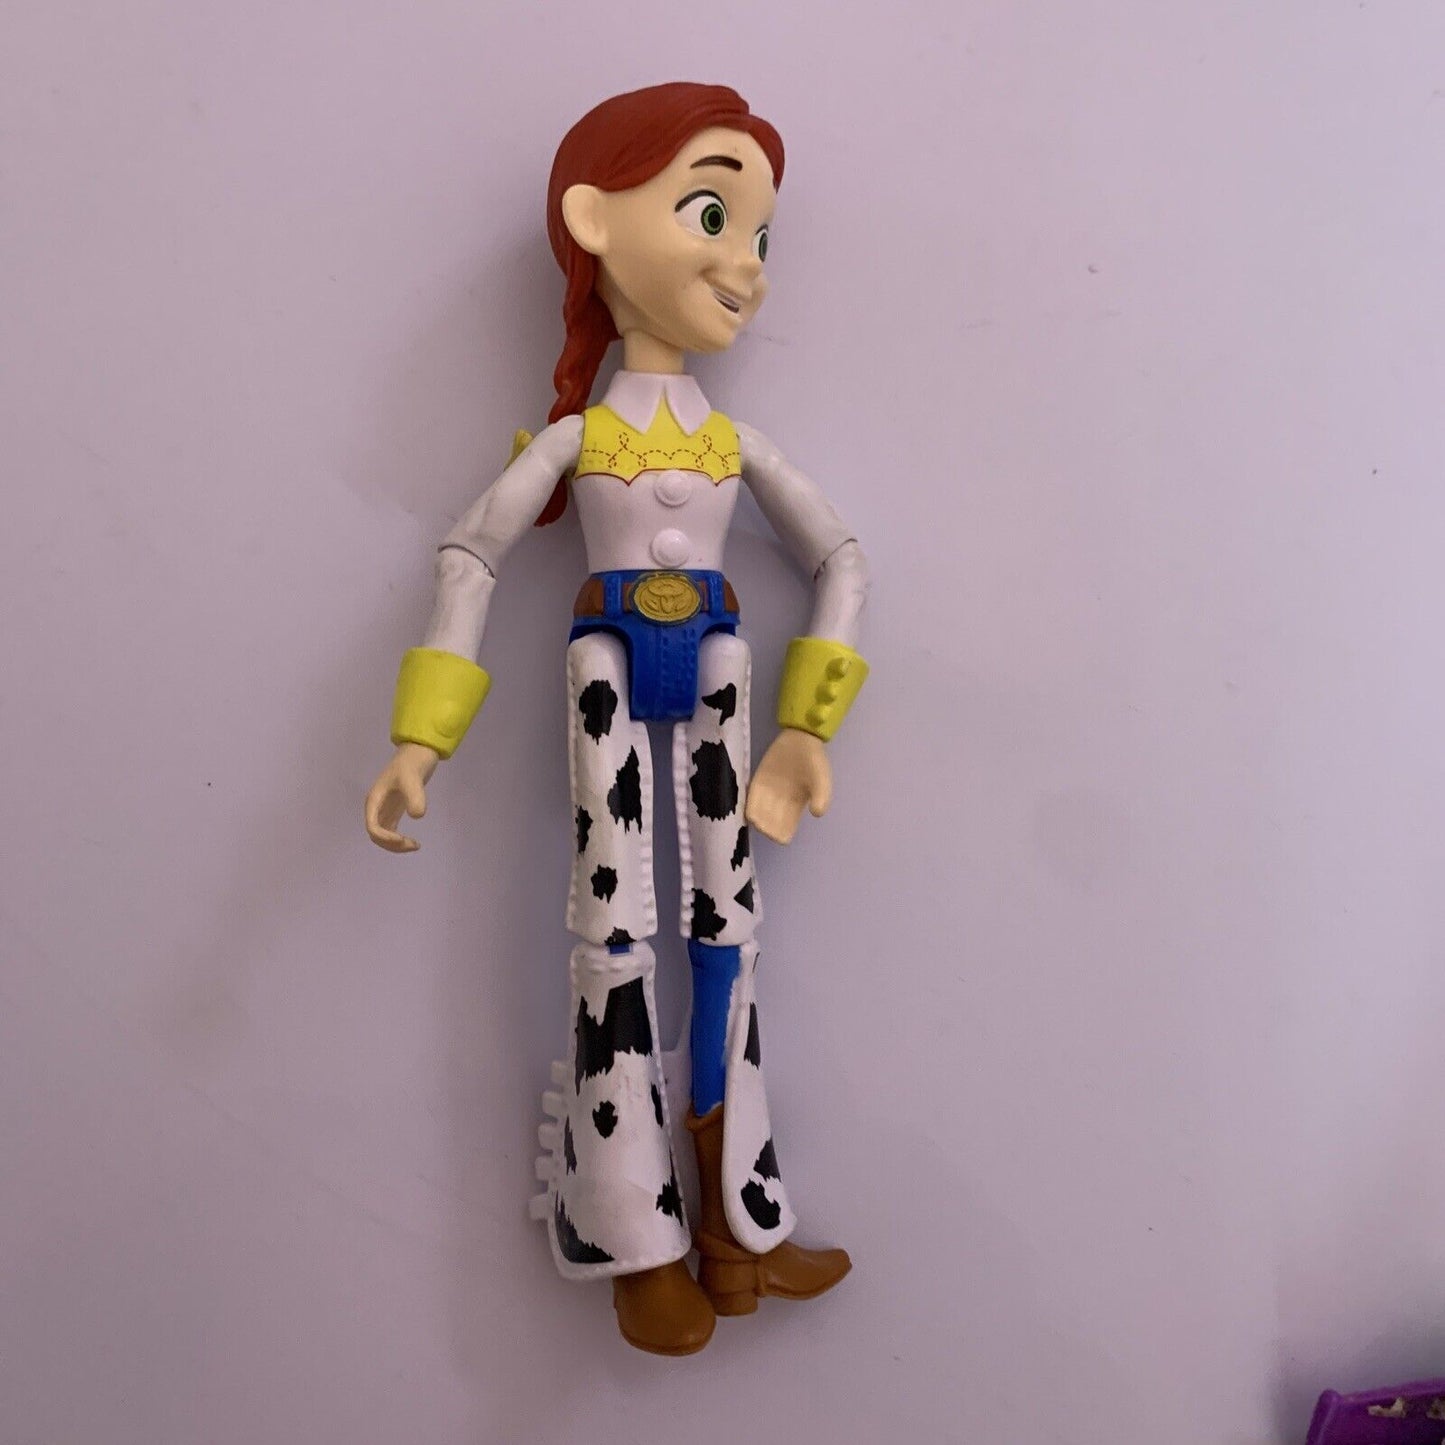 4x Toy Story Action Figure Buzz Lightyear Blue Belt Jesse